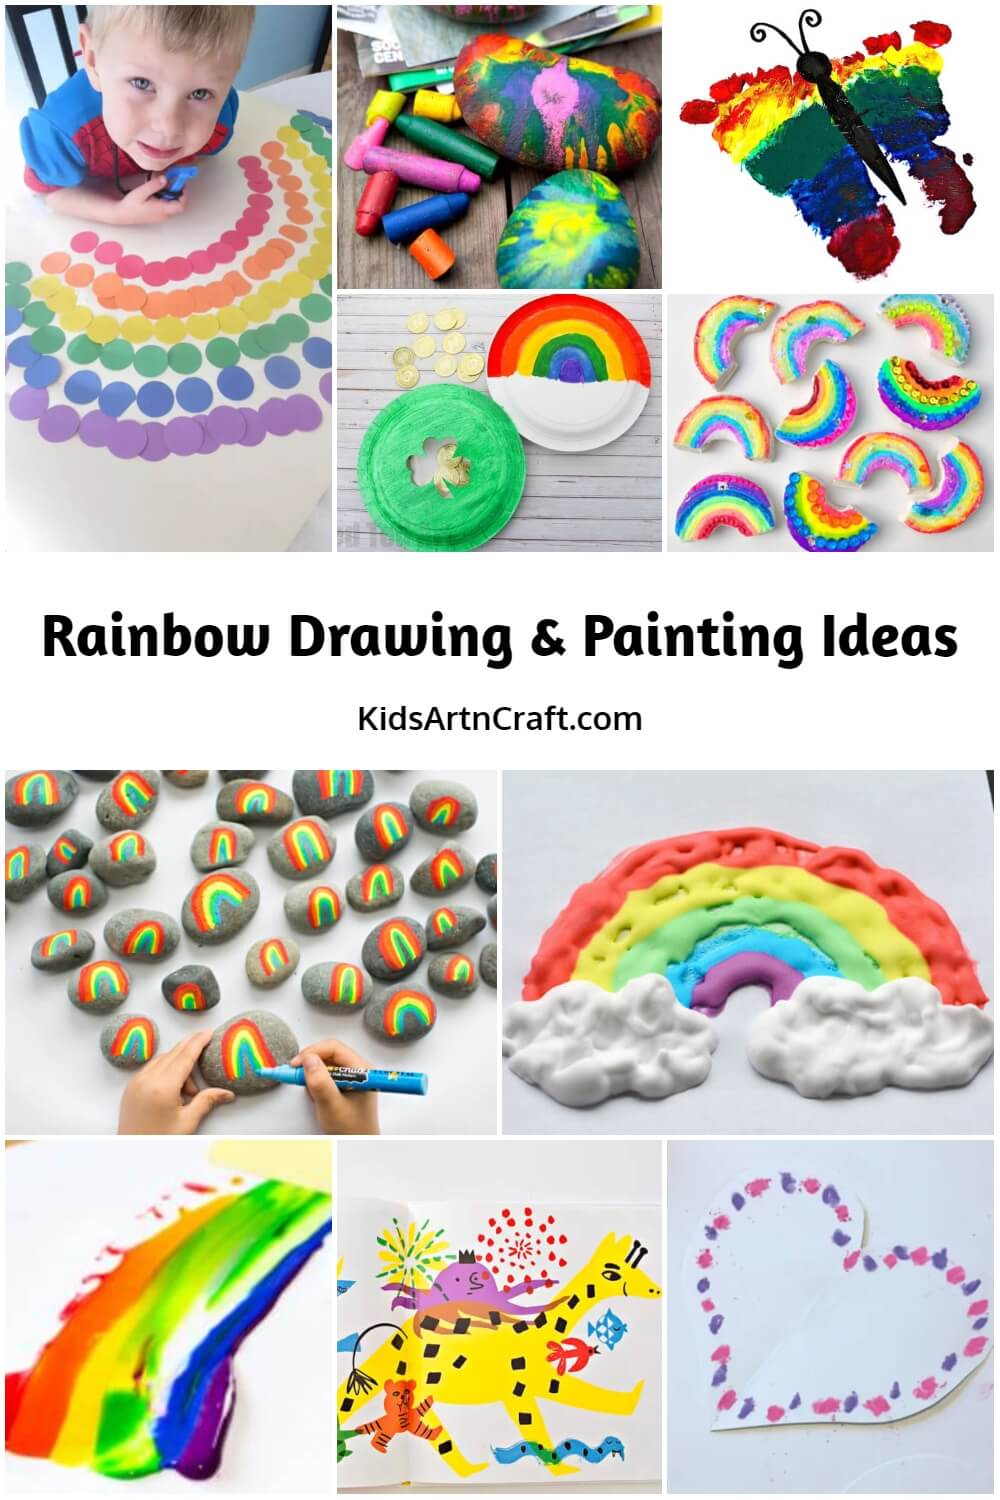 Rainbow Drawing & Painting Ideas